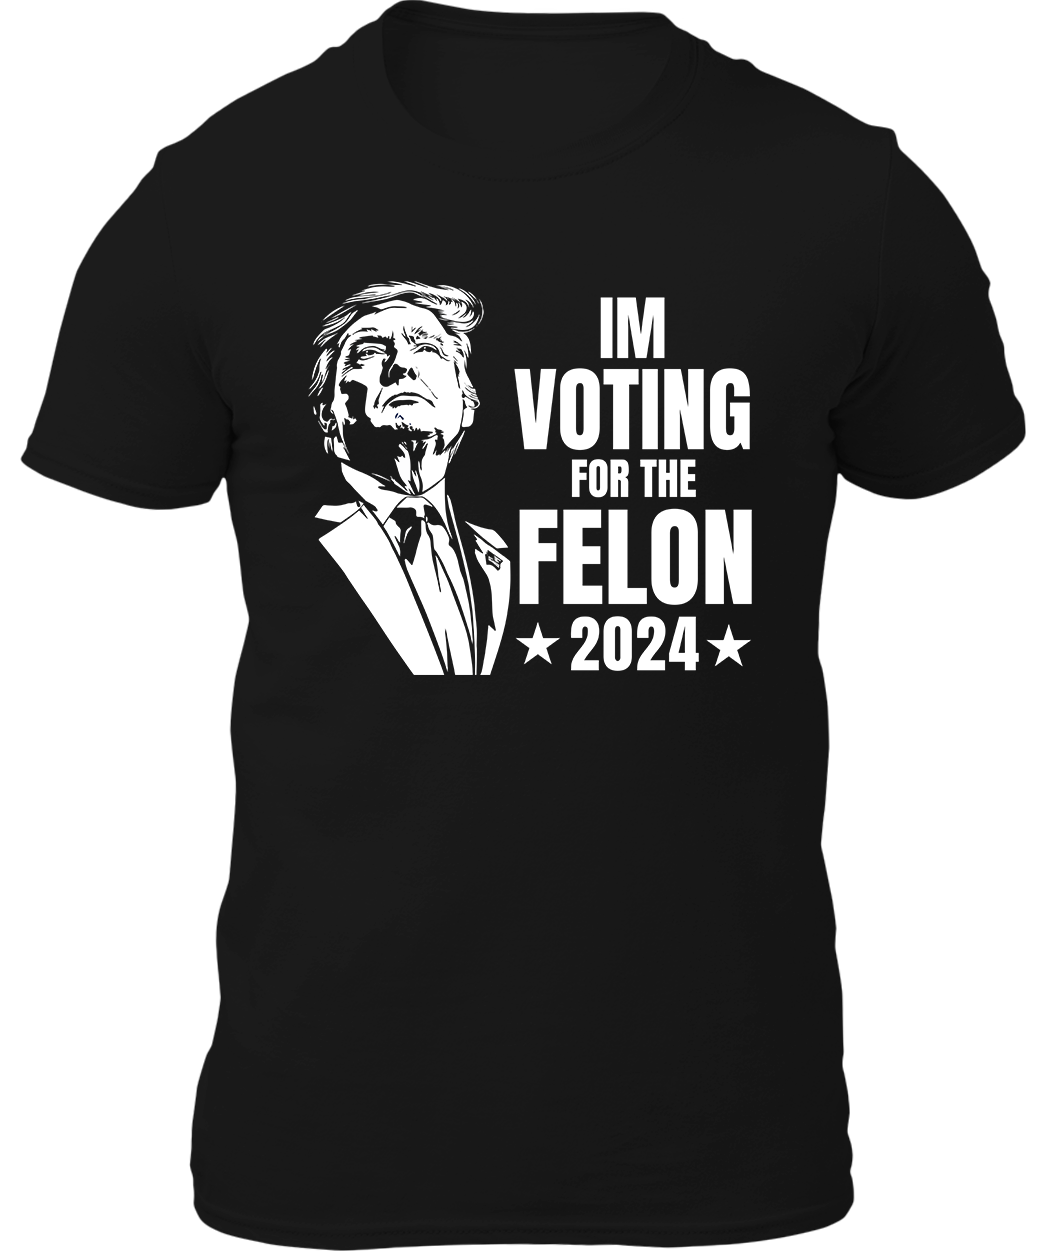 I'm Voting For The Felon in 2024 Shirt